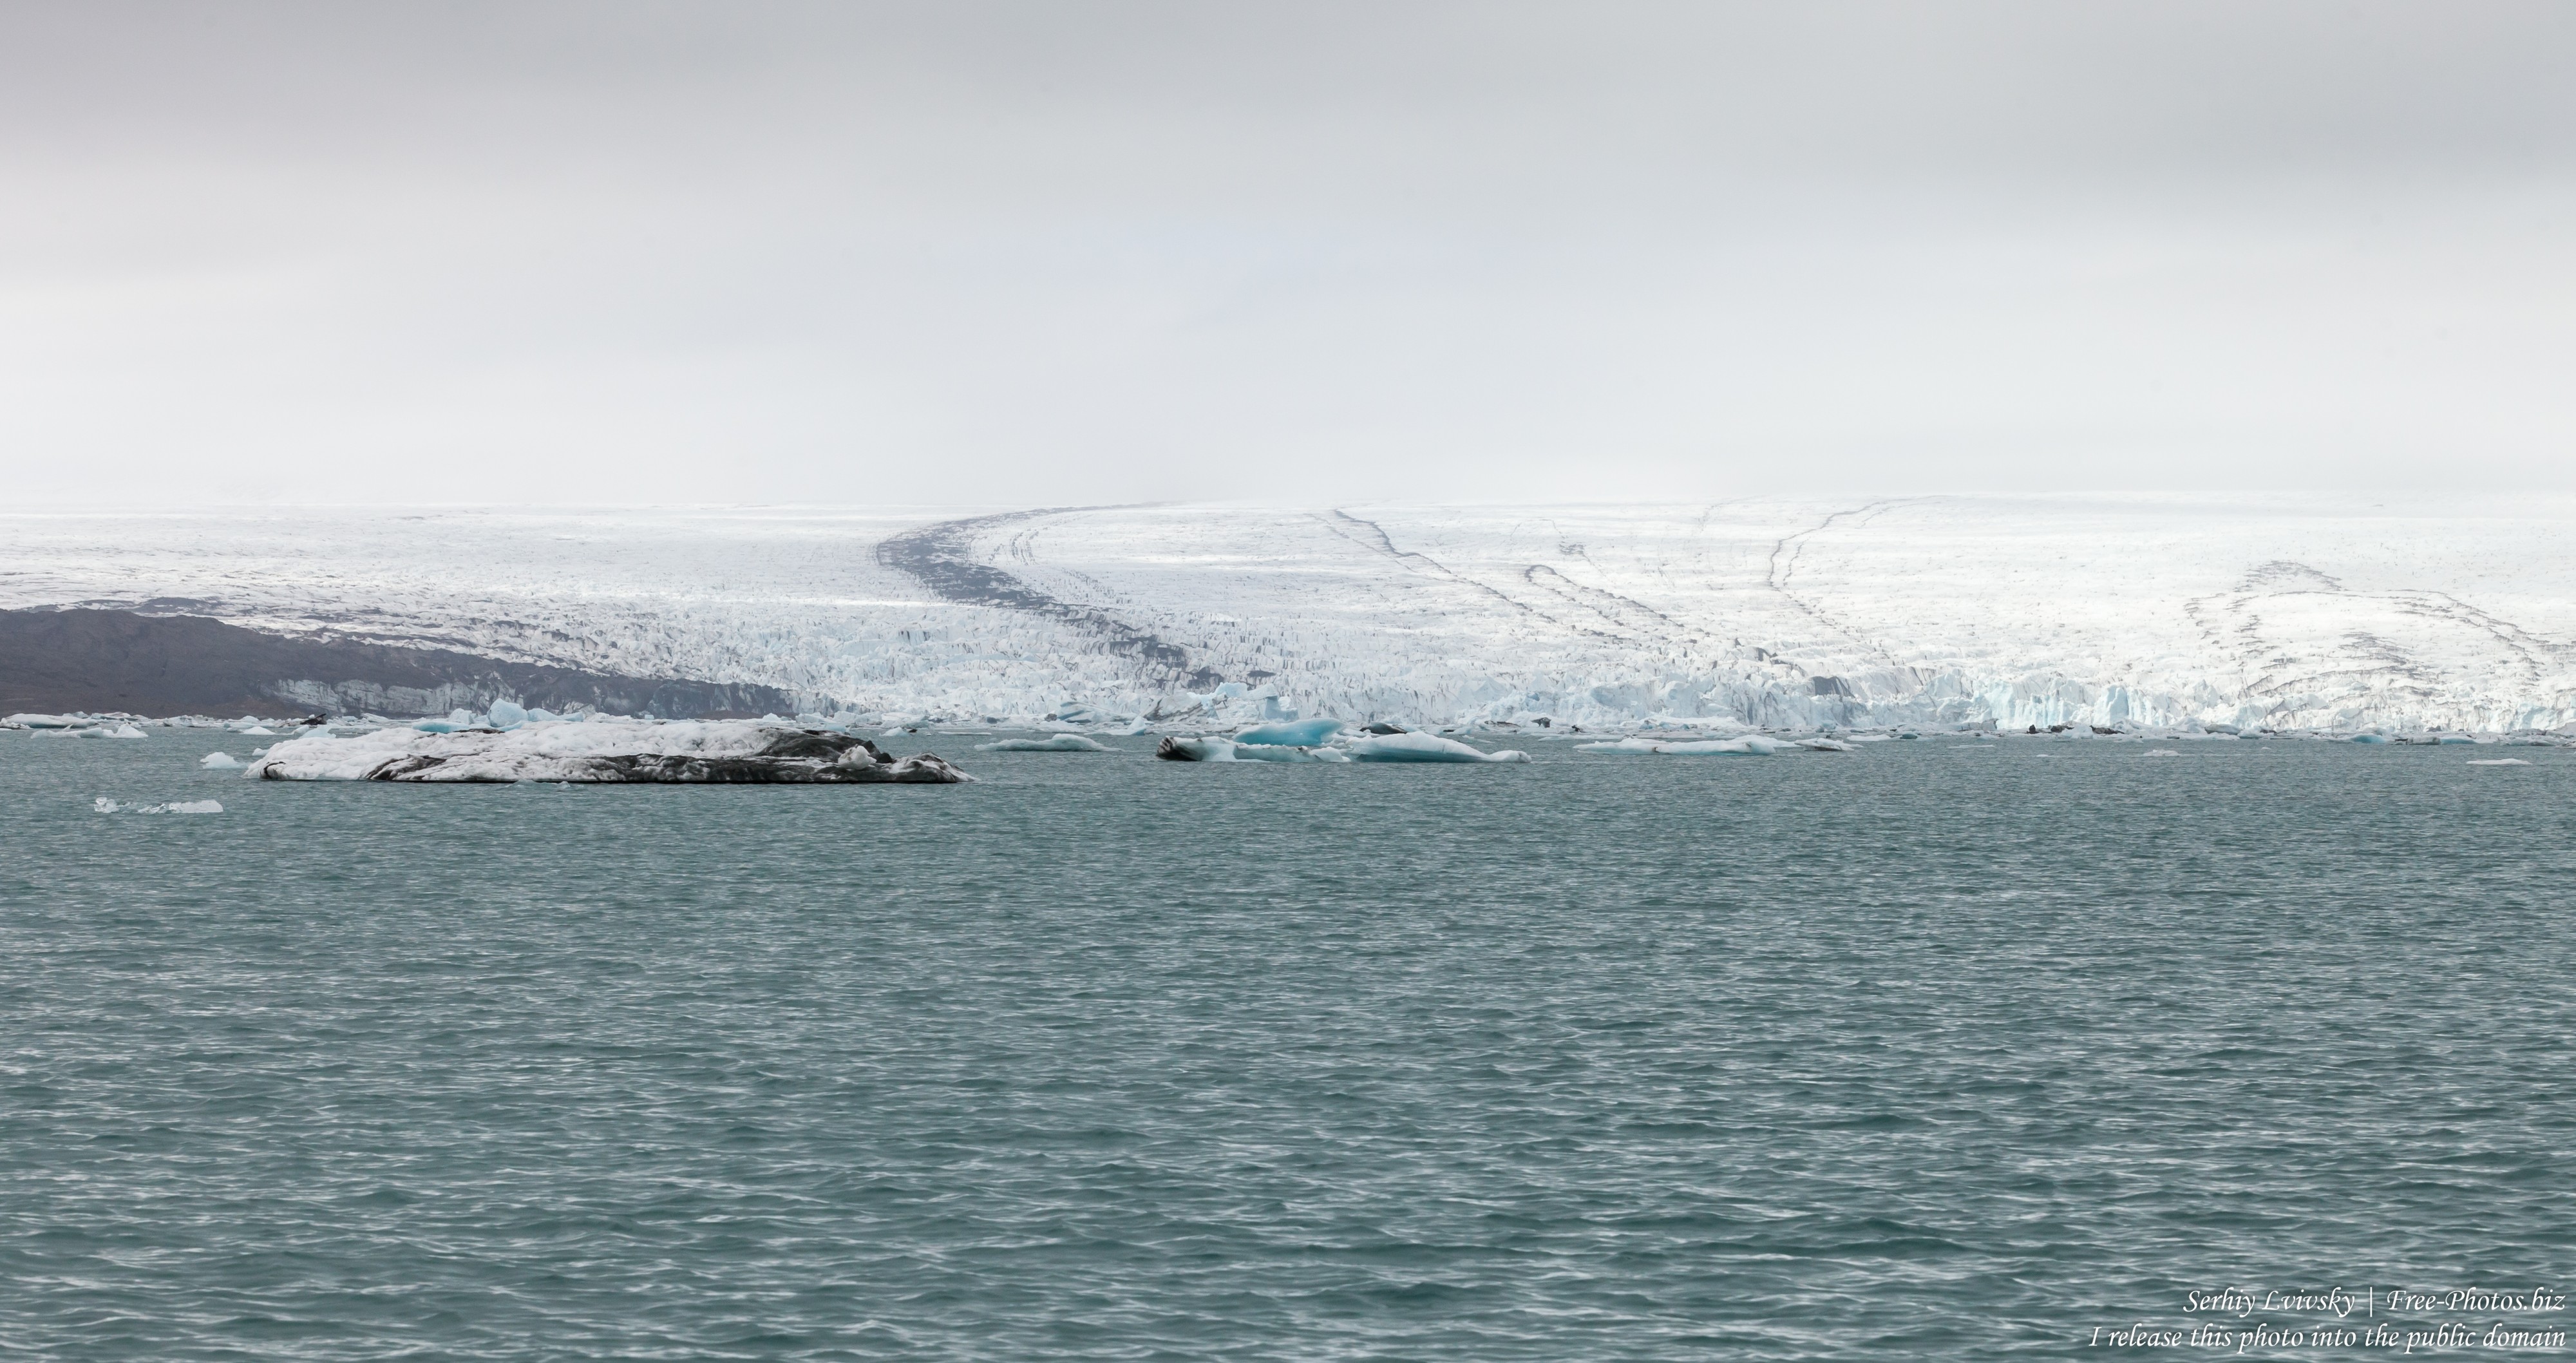 Jokulsarlon Glacier Lagoon, Iceland, photographed in May 2019 by Serhiy Lvivsky, photo 38